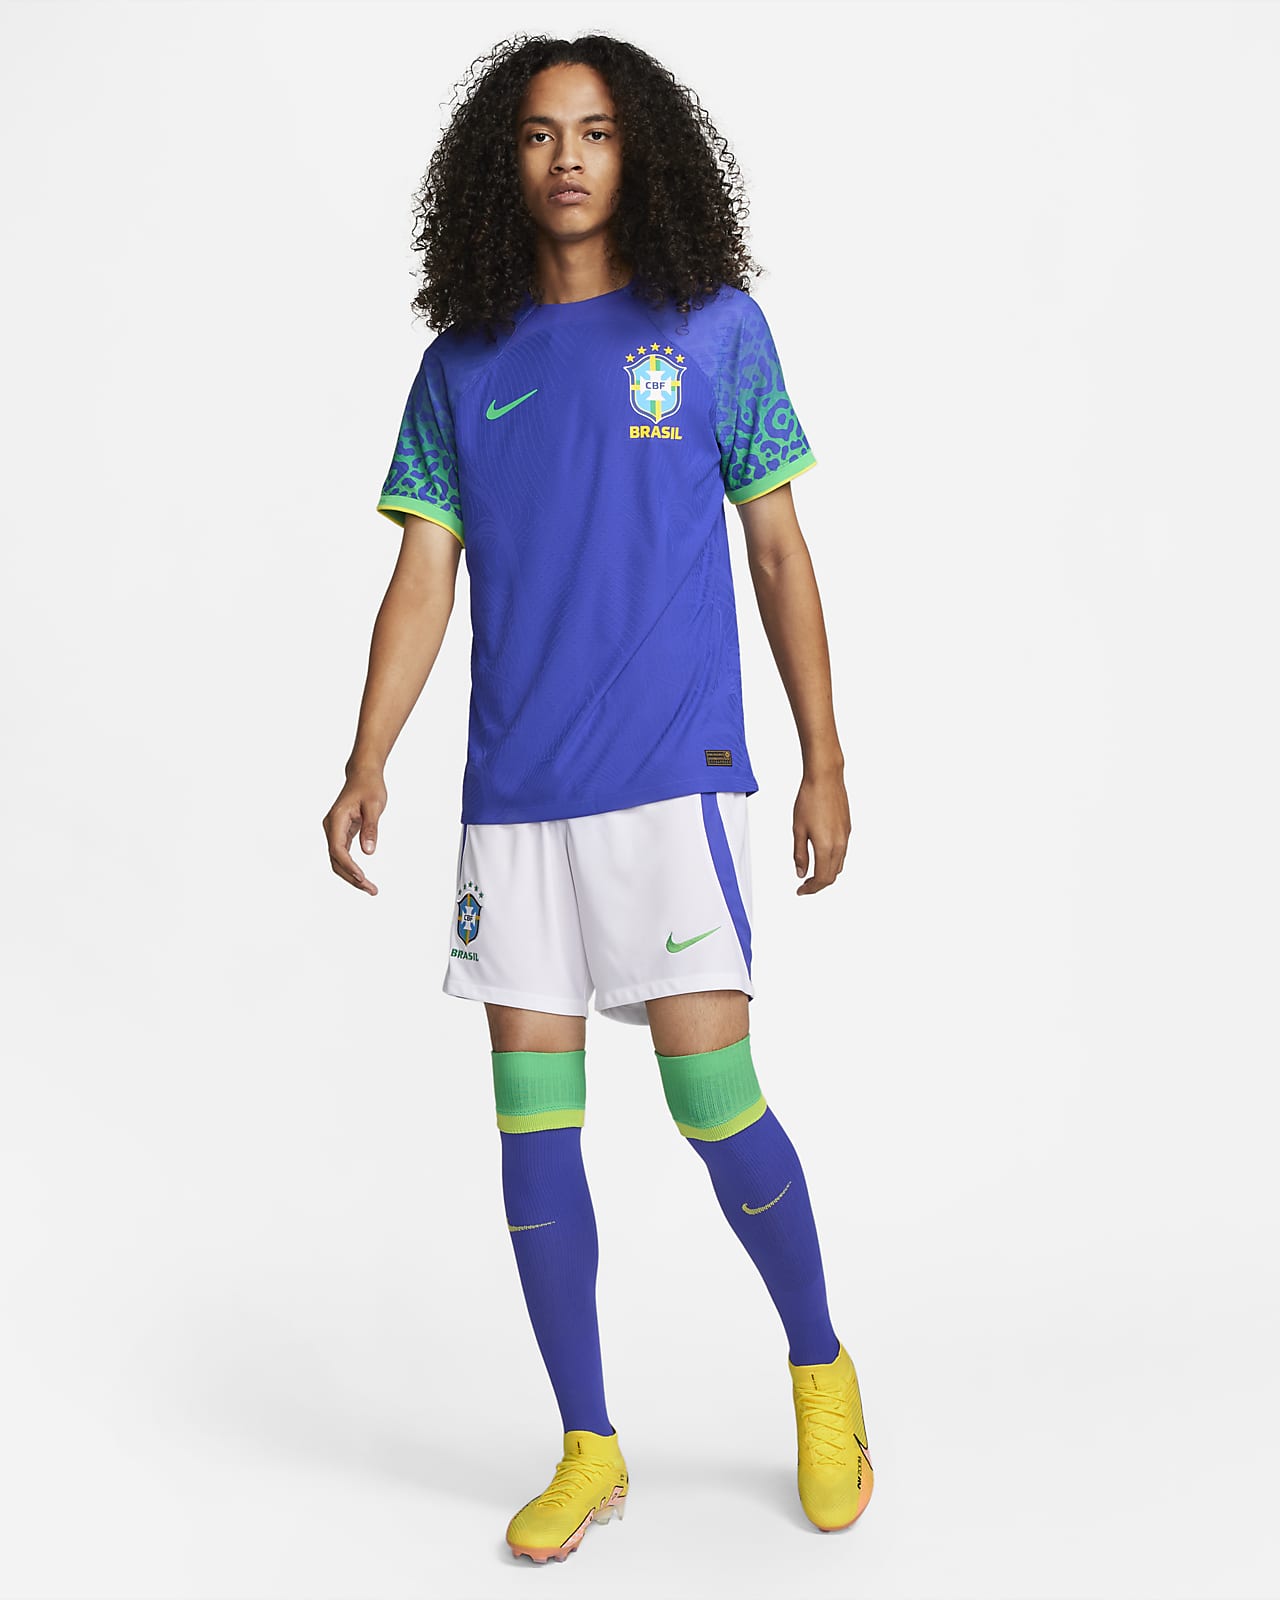 Brazil's footballing vision in attire